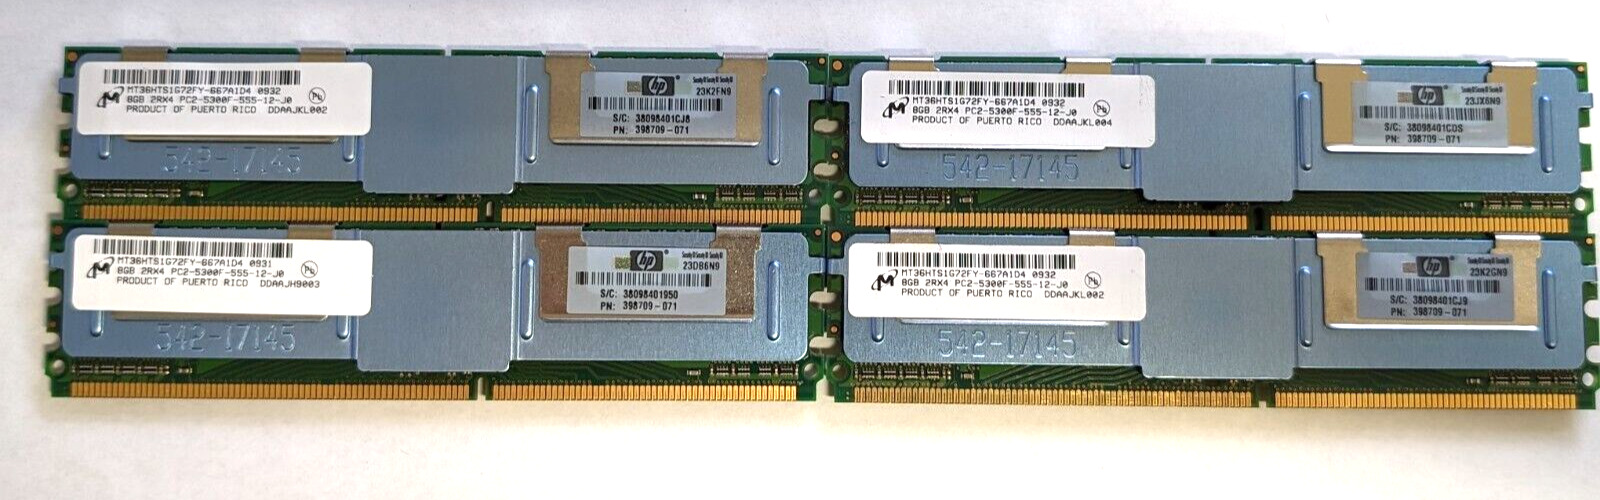 HP  96GB 12x8GB PC2-5300F FB-DIMM DL380 DL580 Server Memory 398709-071 Bulk Lot